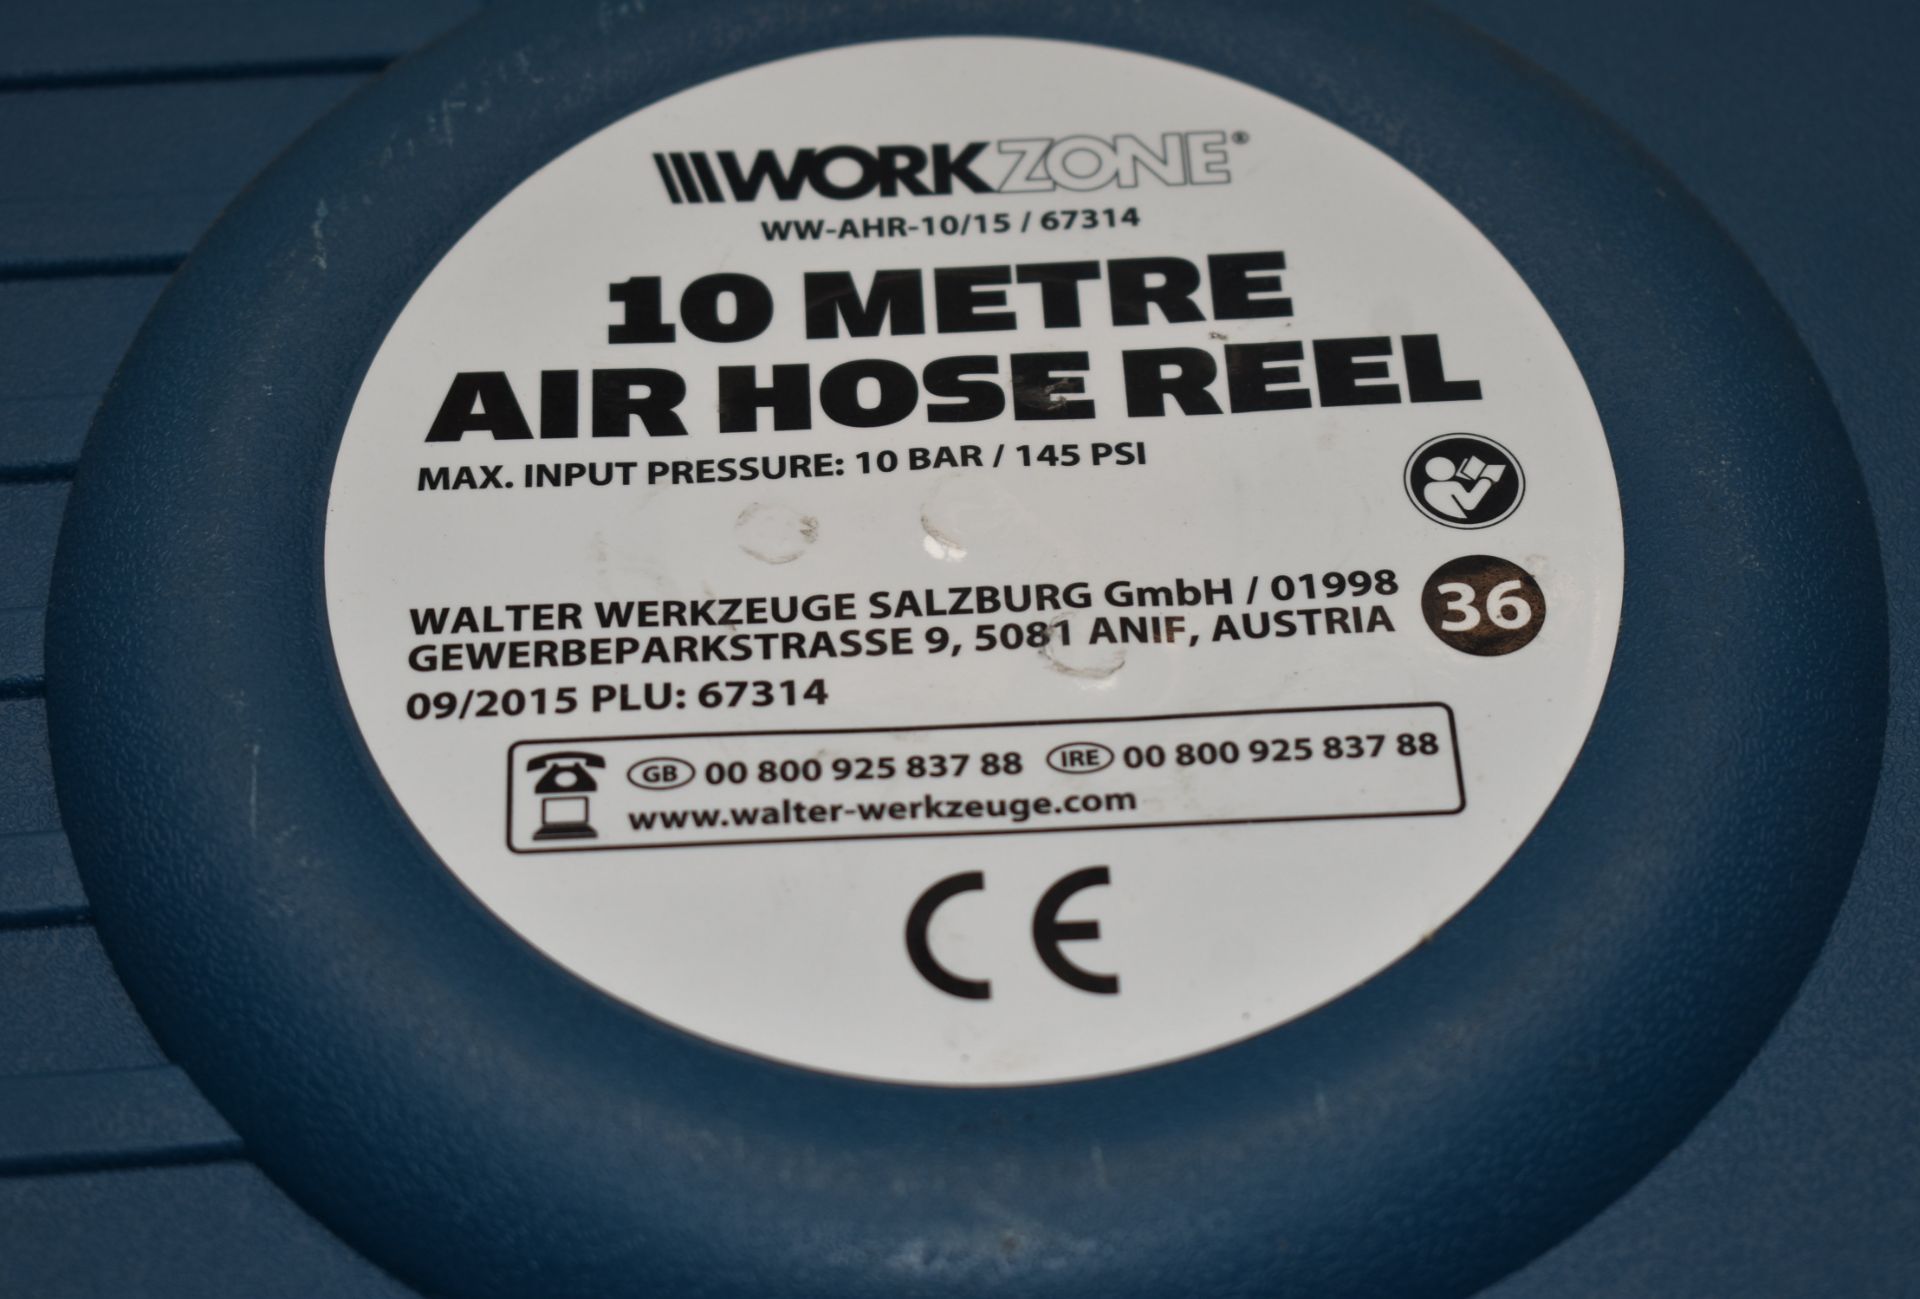 1 x WORKZONE 10 Metre Air Hose Reel - 10 Bar Max. Input Pressure - Ref: K253 - CL905 - Location: Alt - Image 8 of 8